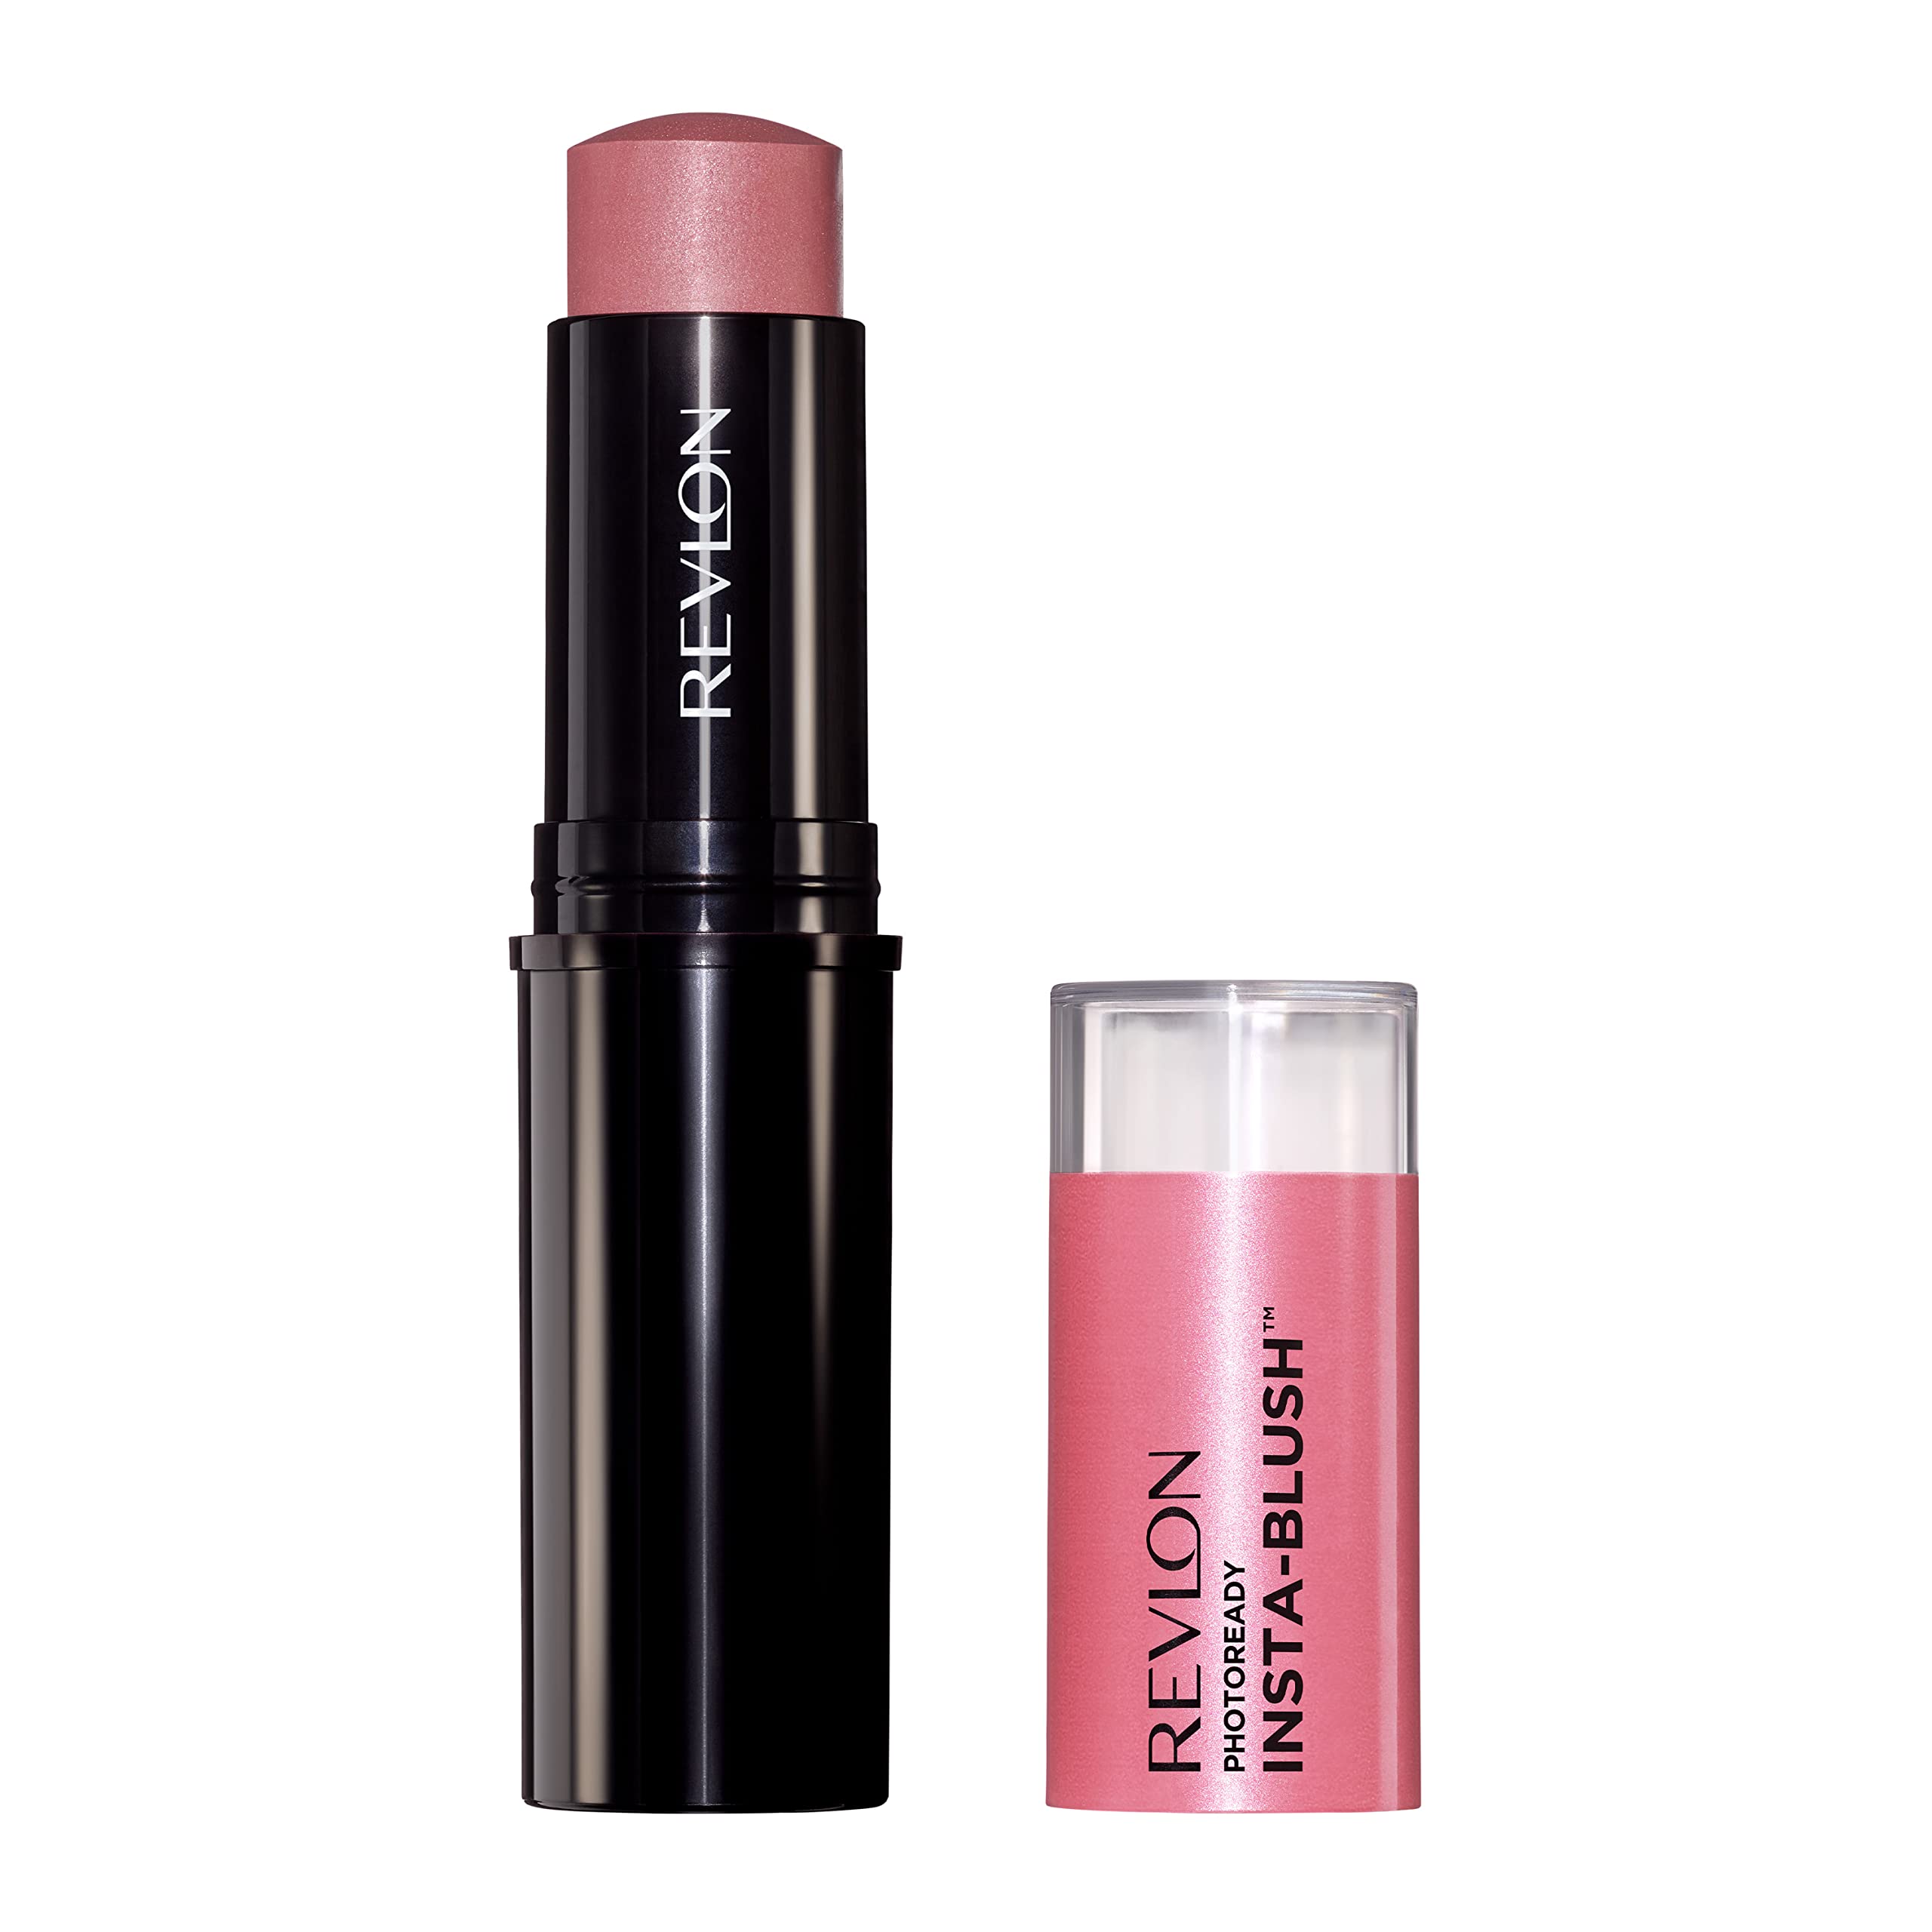 Revlon Blush Stick, PhotoReady Insta-Blush Face Makeup with Cream to Powder Formula, High Impact Color, Moisturizing Creamy Formula, 320 Berry Kiss, 1.15 Oz